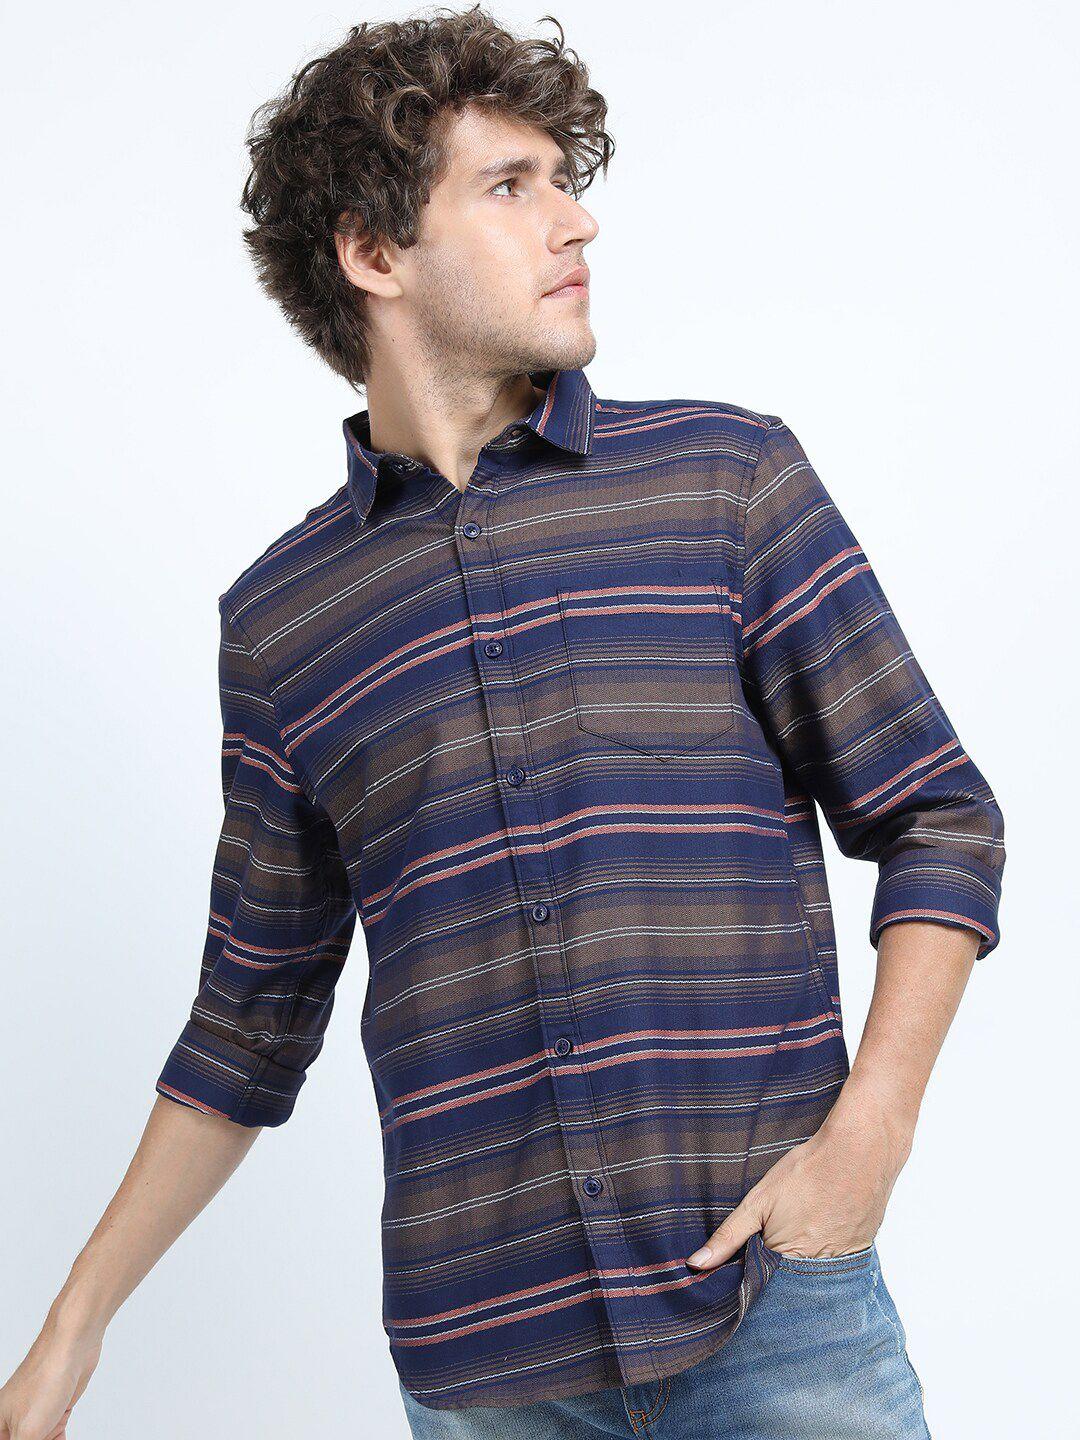 ketch-men-navy-blue-slim-fit-striped-casual-shirt